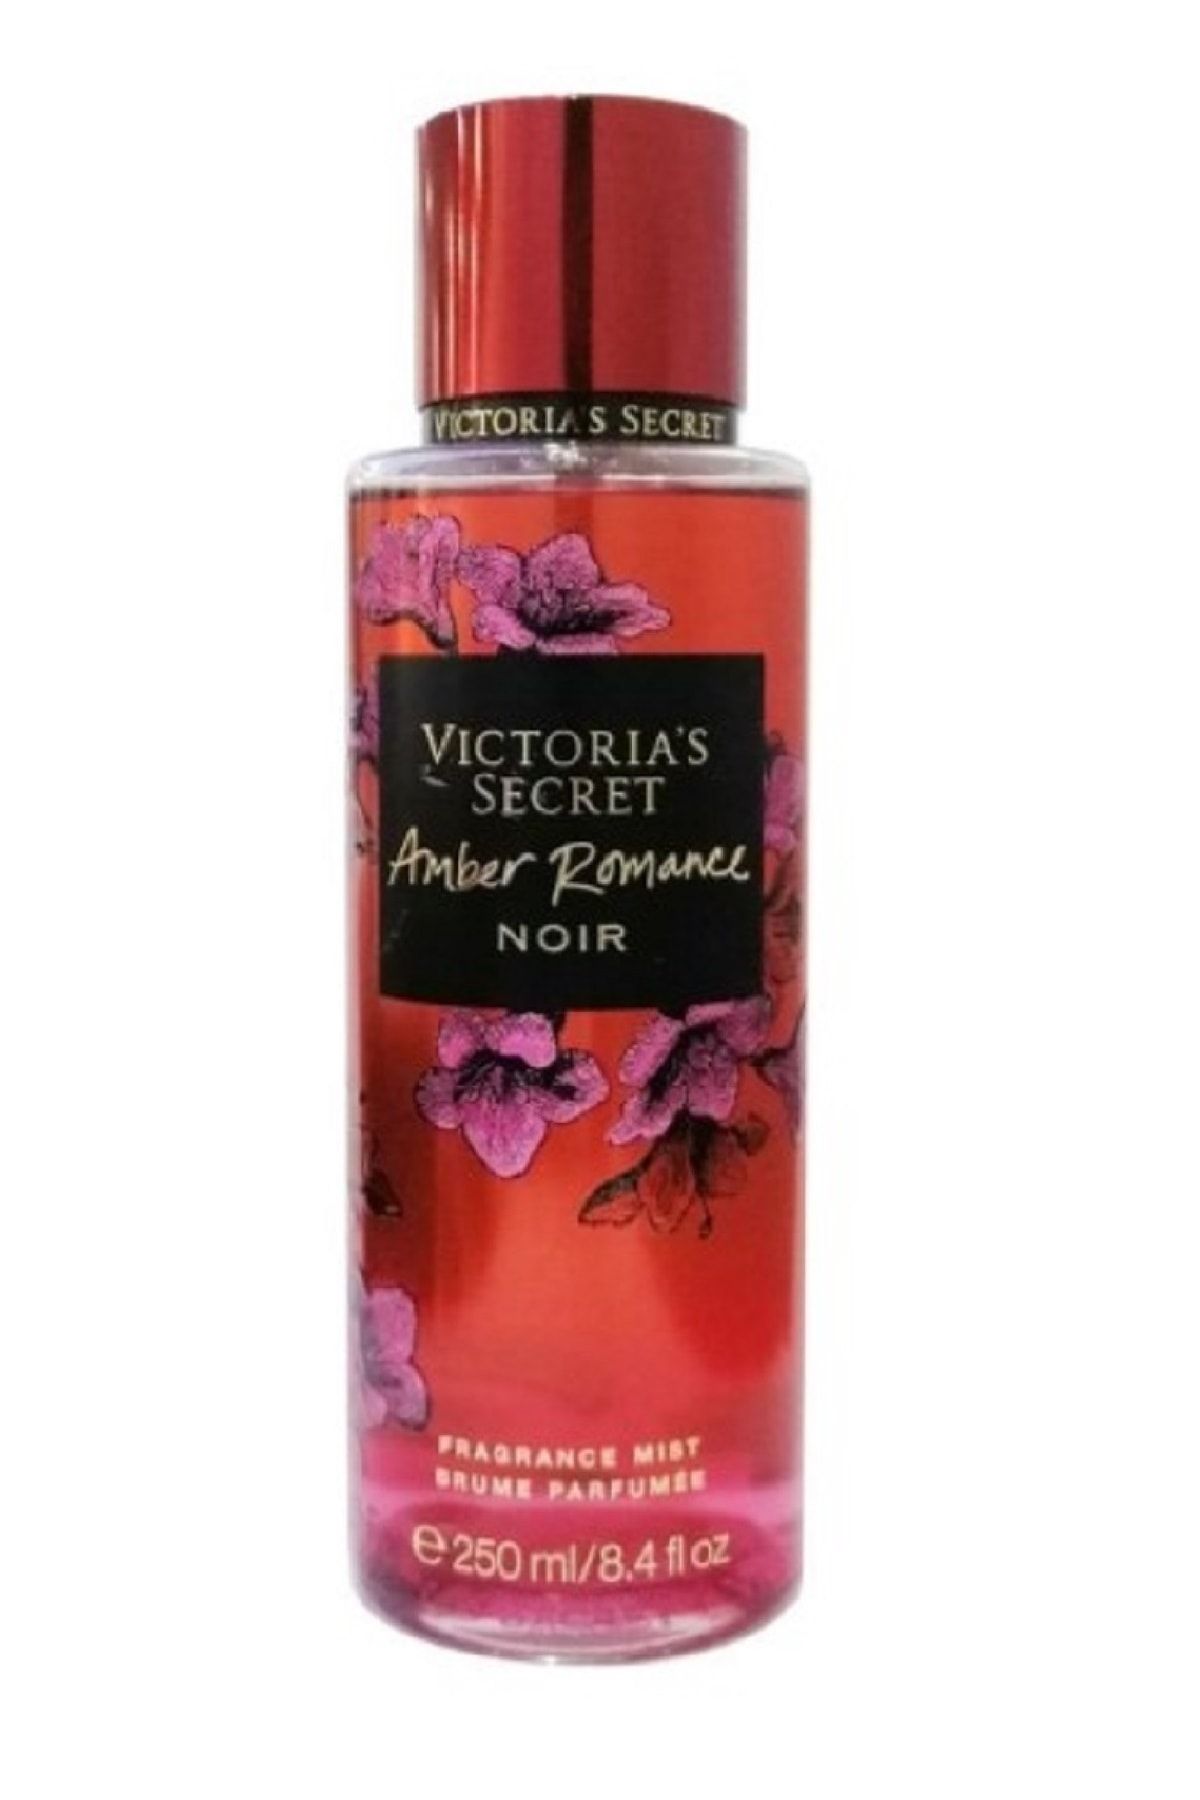 Victoria's Secret Amber Romance Noir Fragrance Mist 250ml